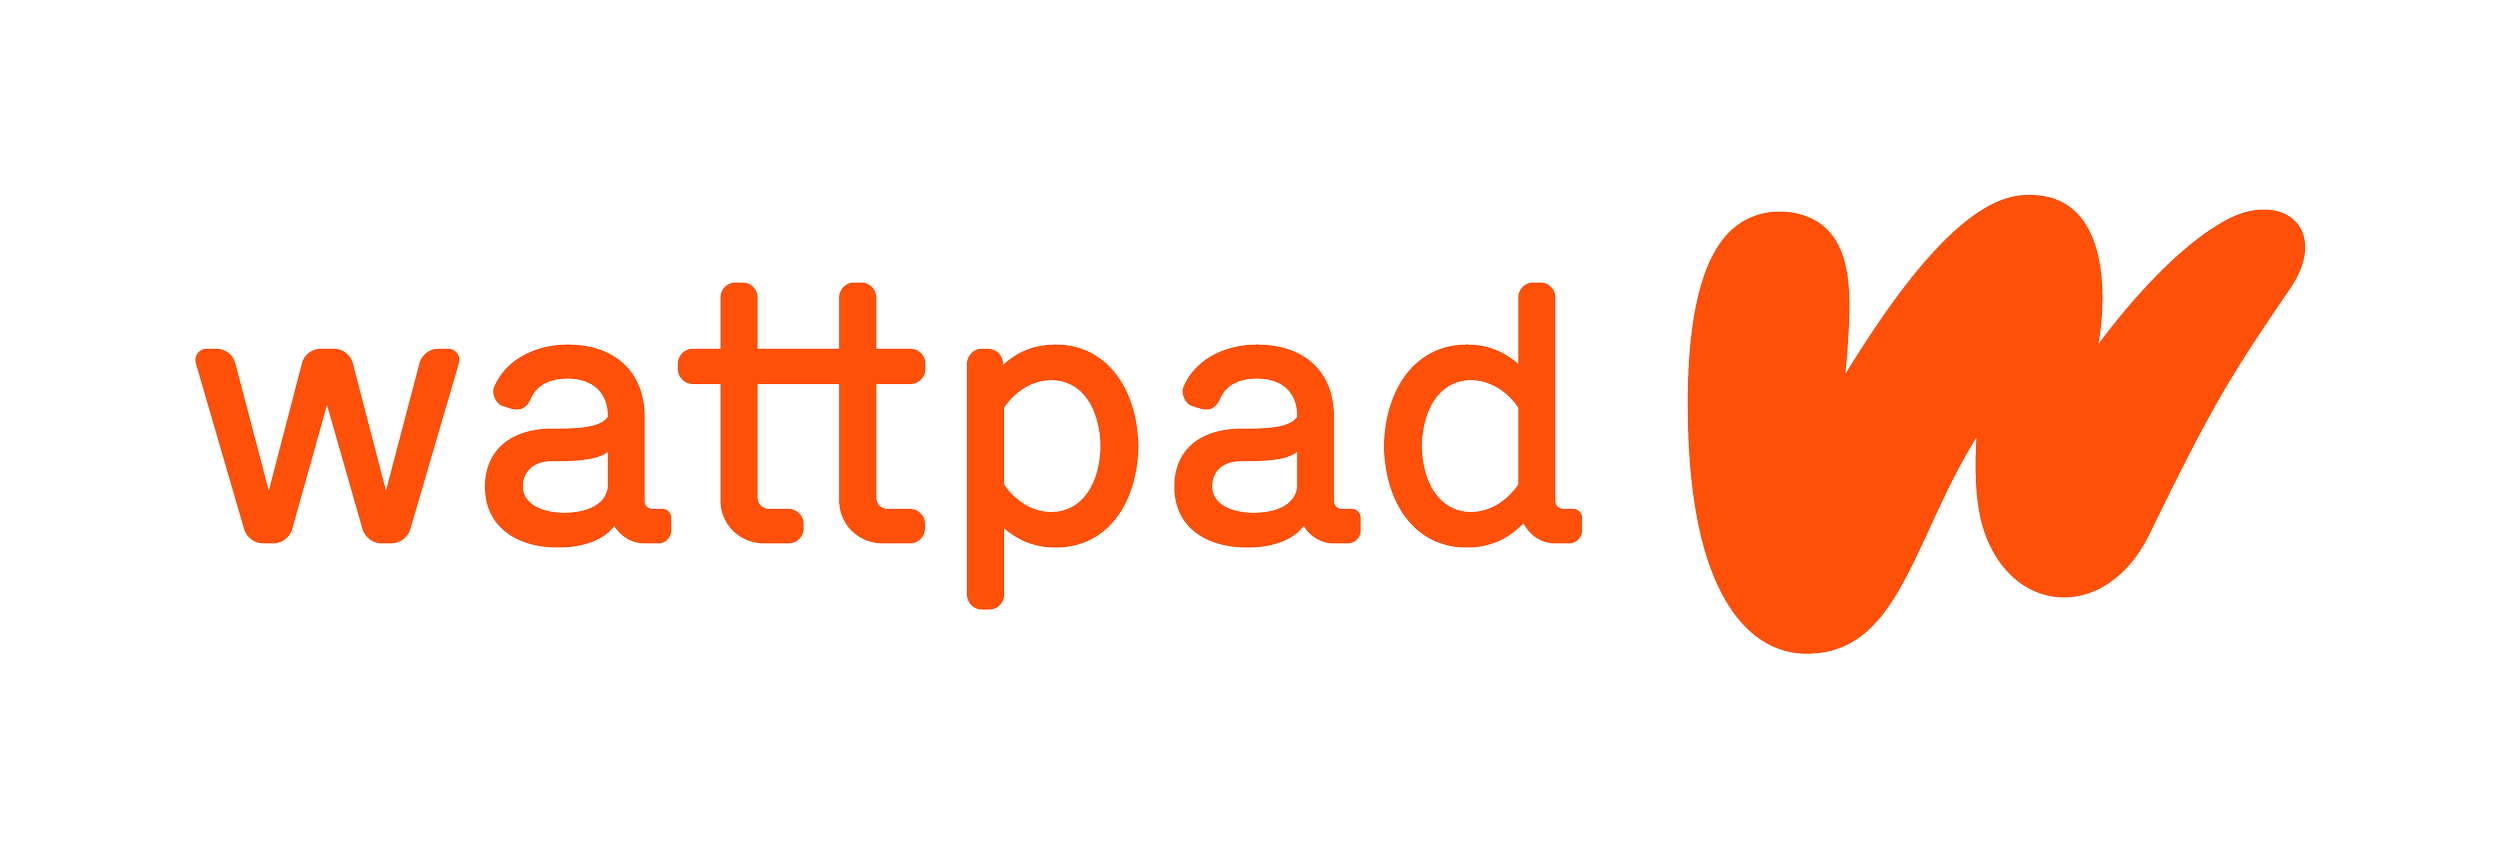 Wattpad_logo.png